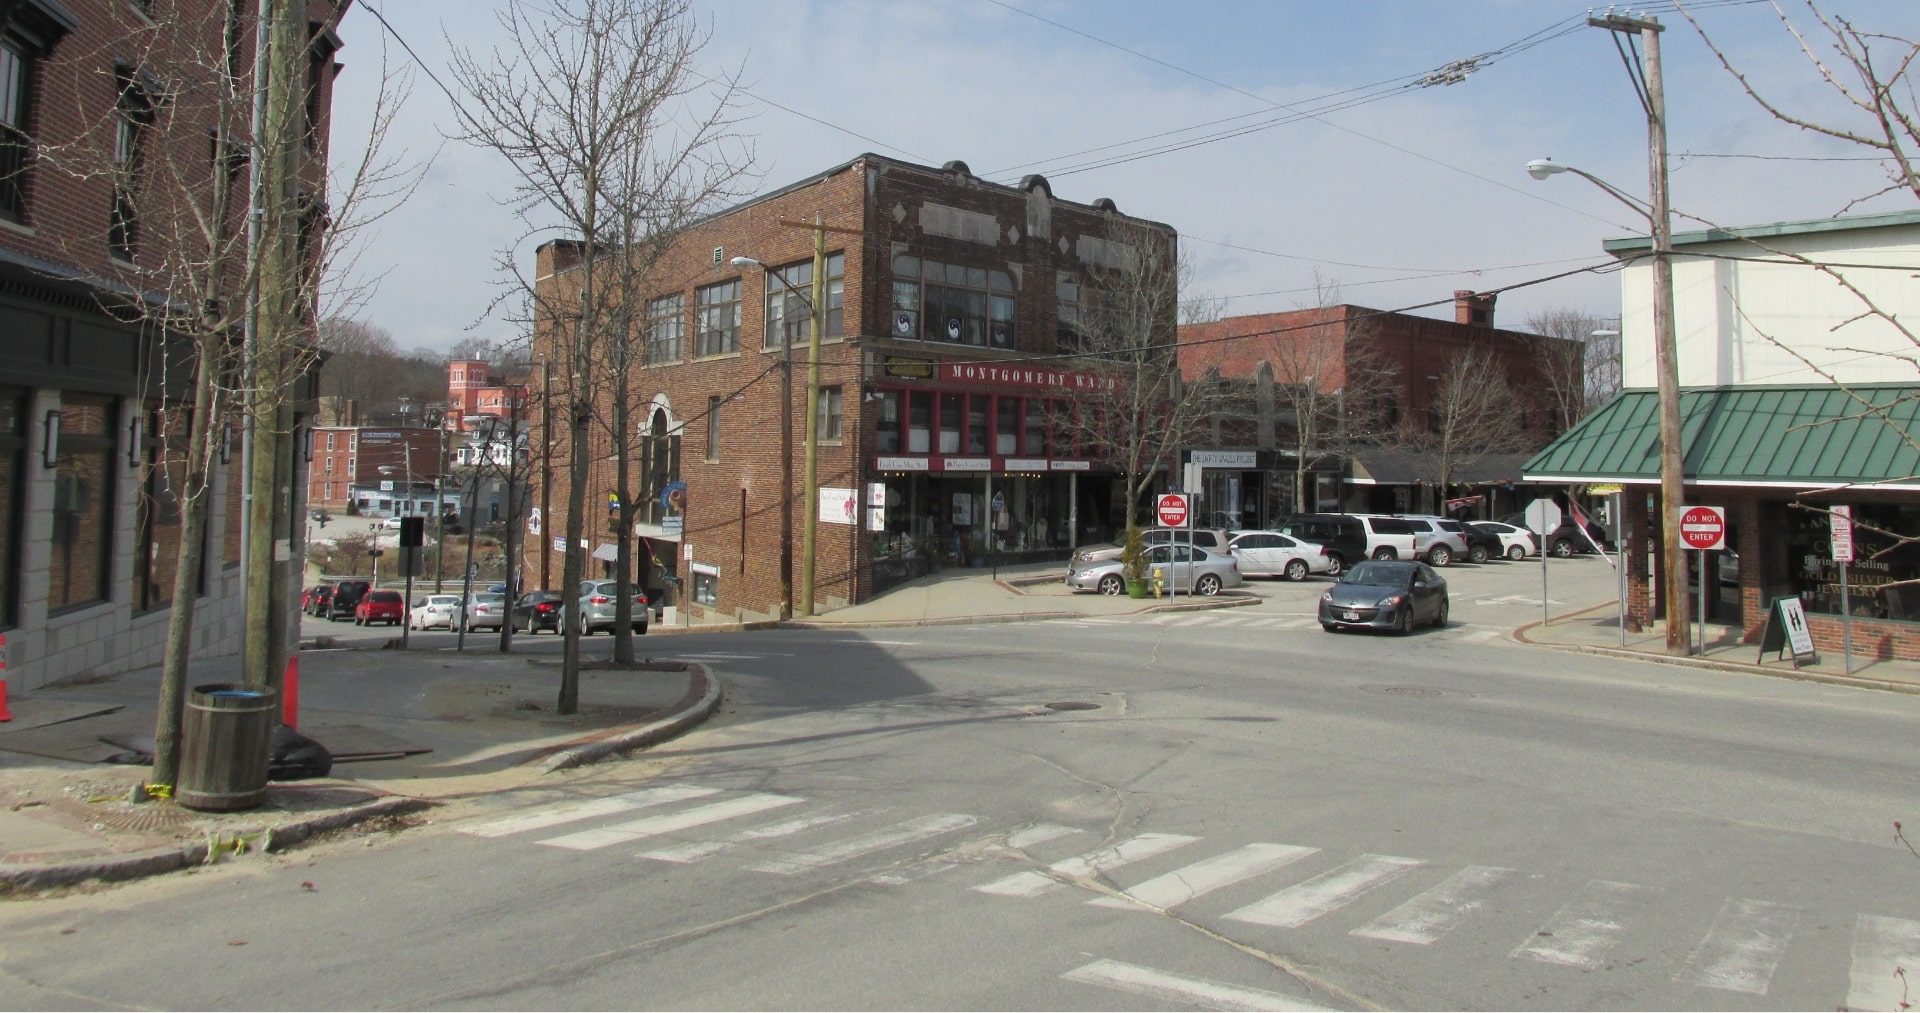 Downtown area of Putnam Connecticut